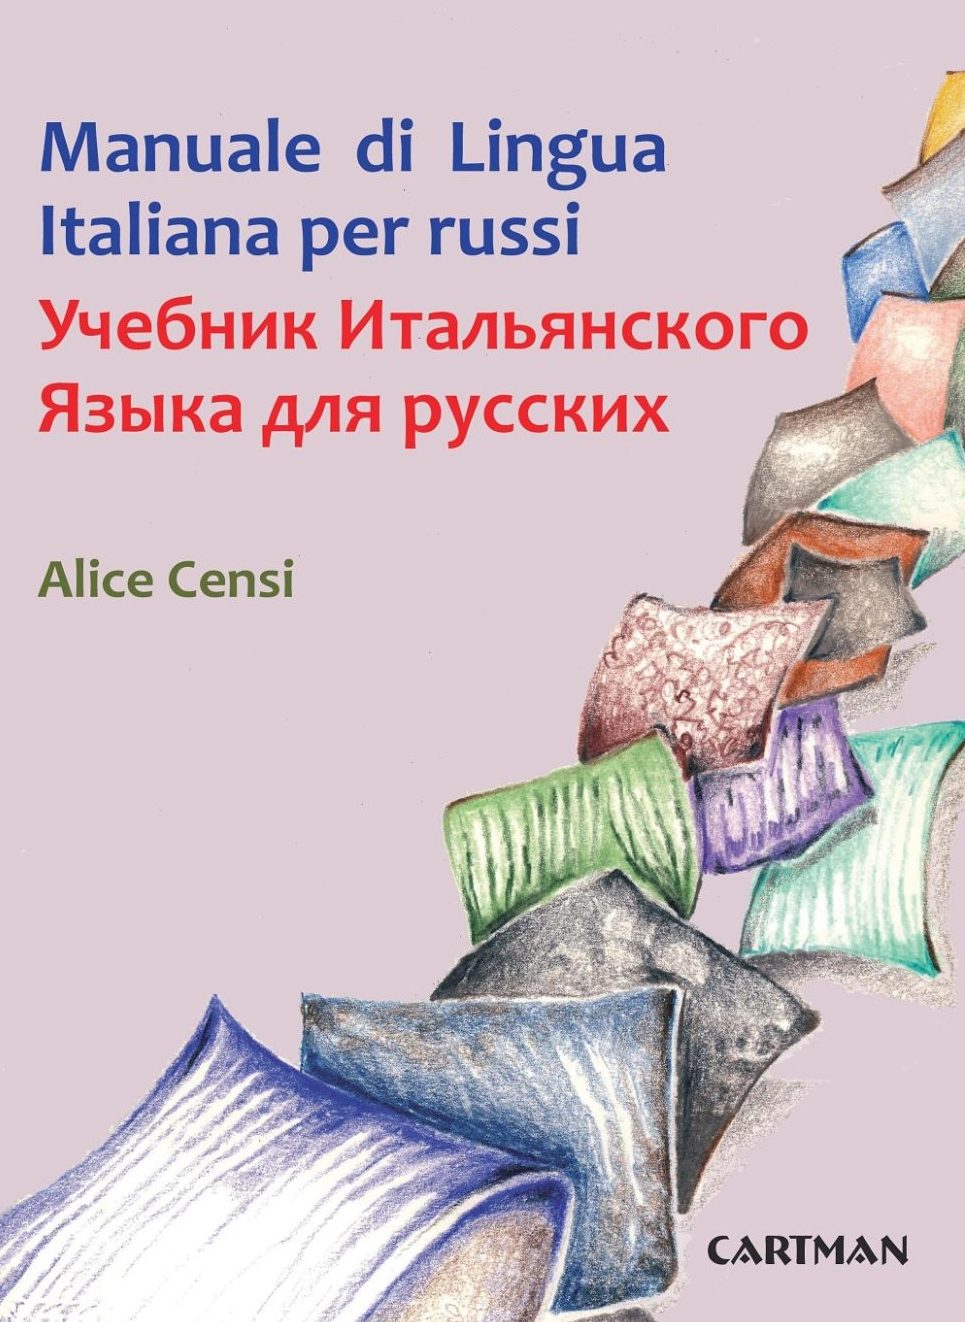 Manuale di Lingua Italiana per russi | Учебник Итальянского Языка для русских